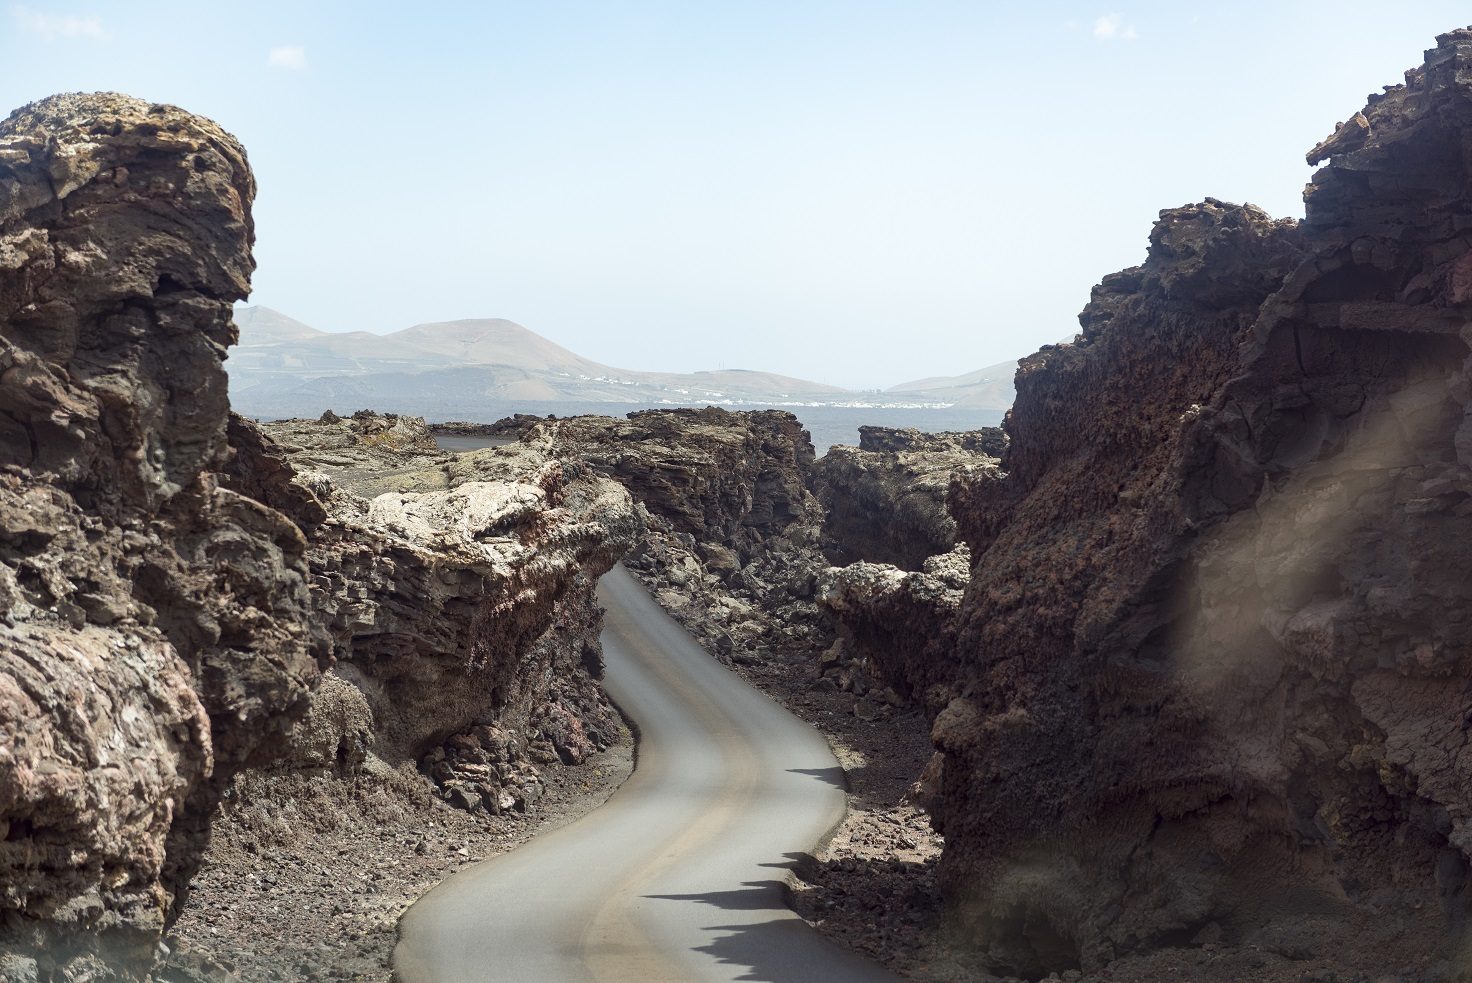 Roadway through lava formation